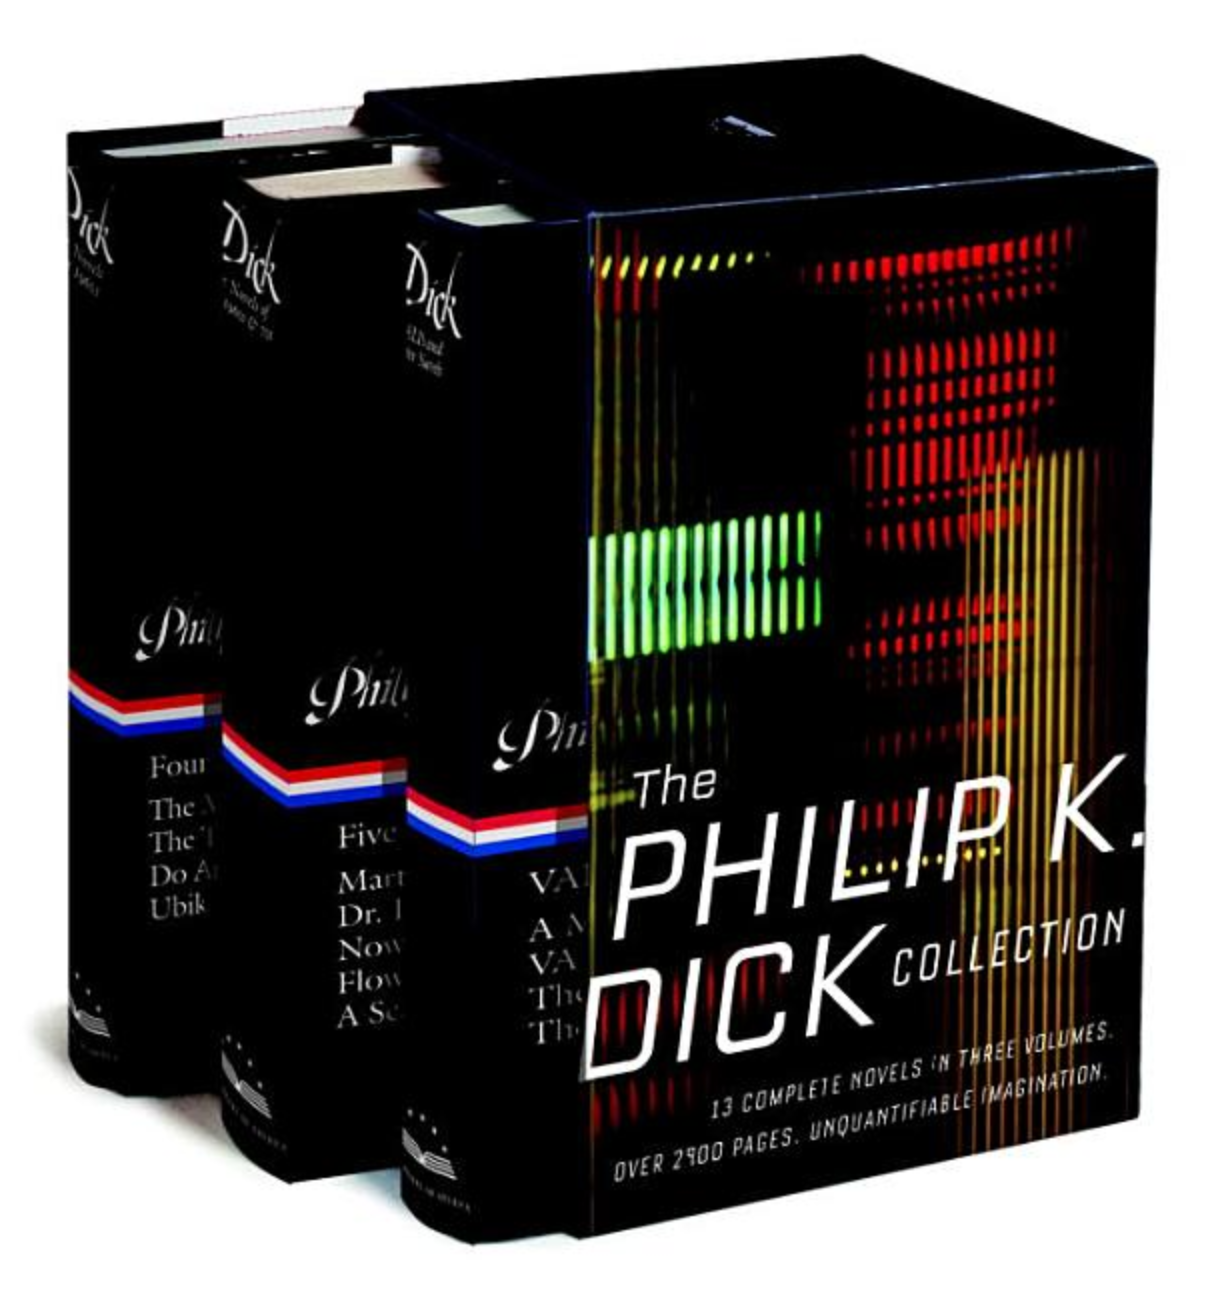 Philip k dick best novels